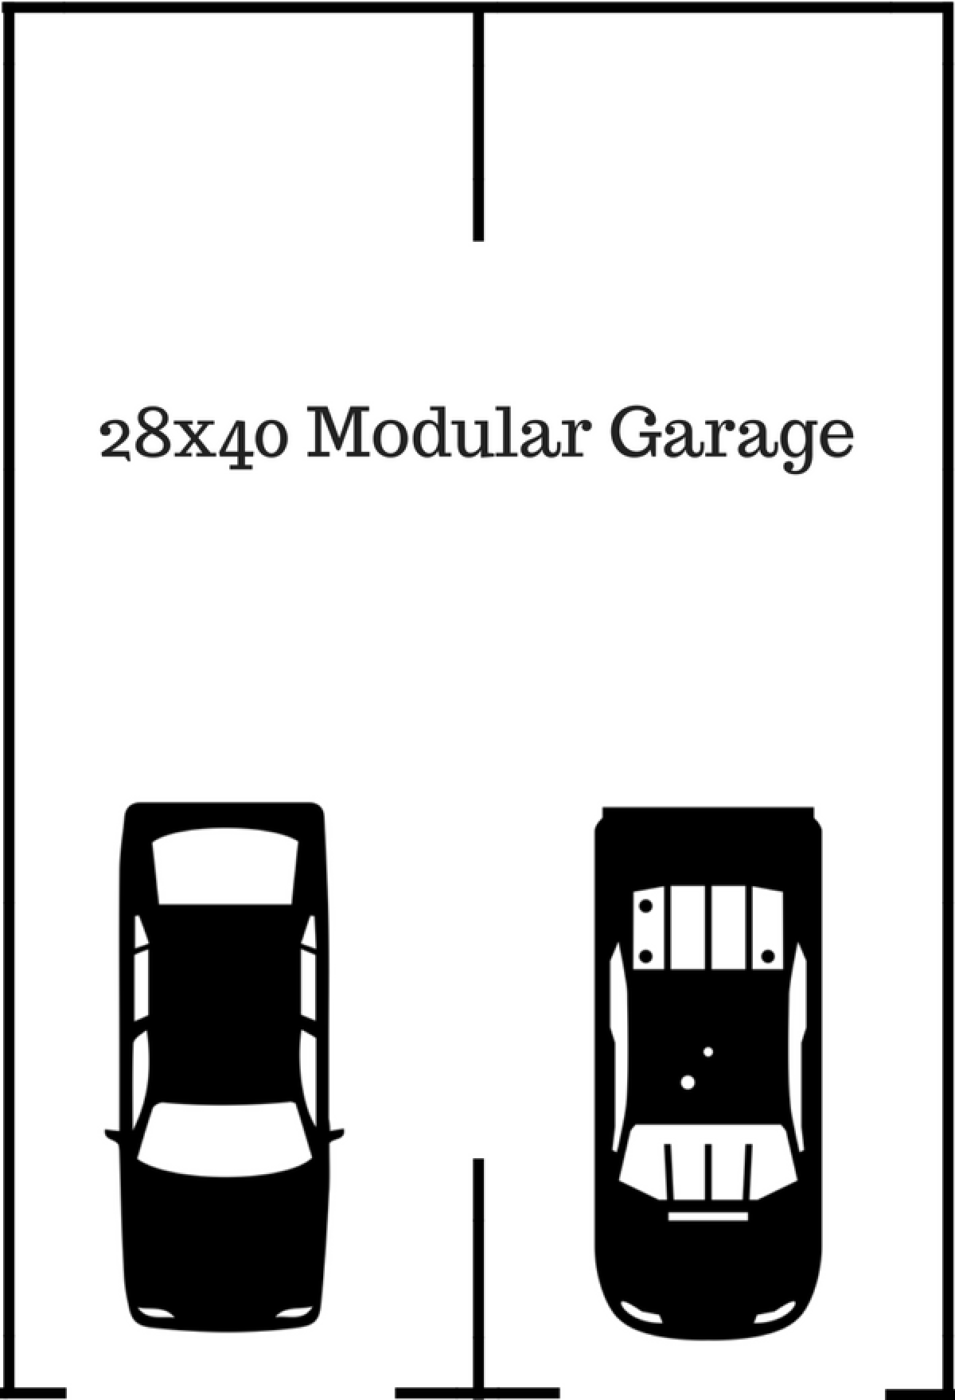 2 car garage dimensions 28x40 modular garage